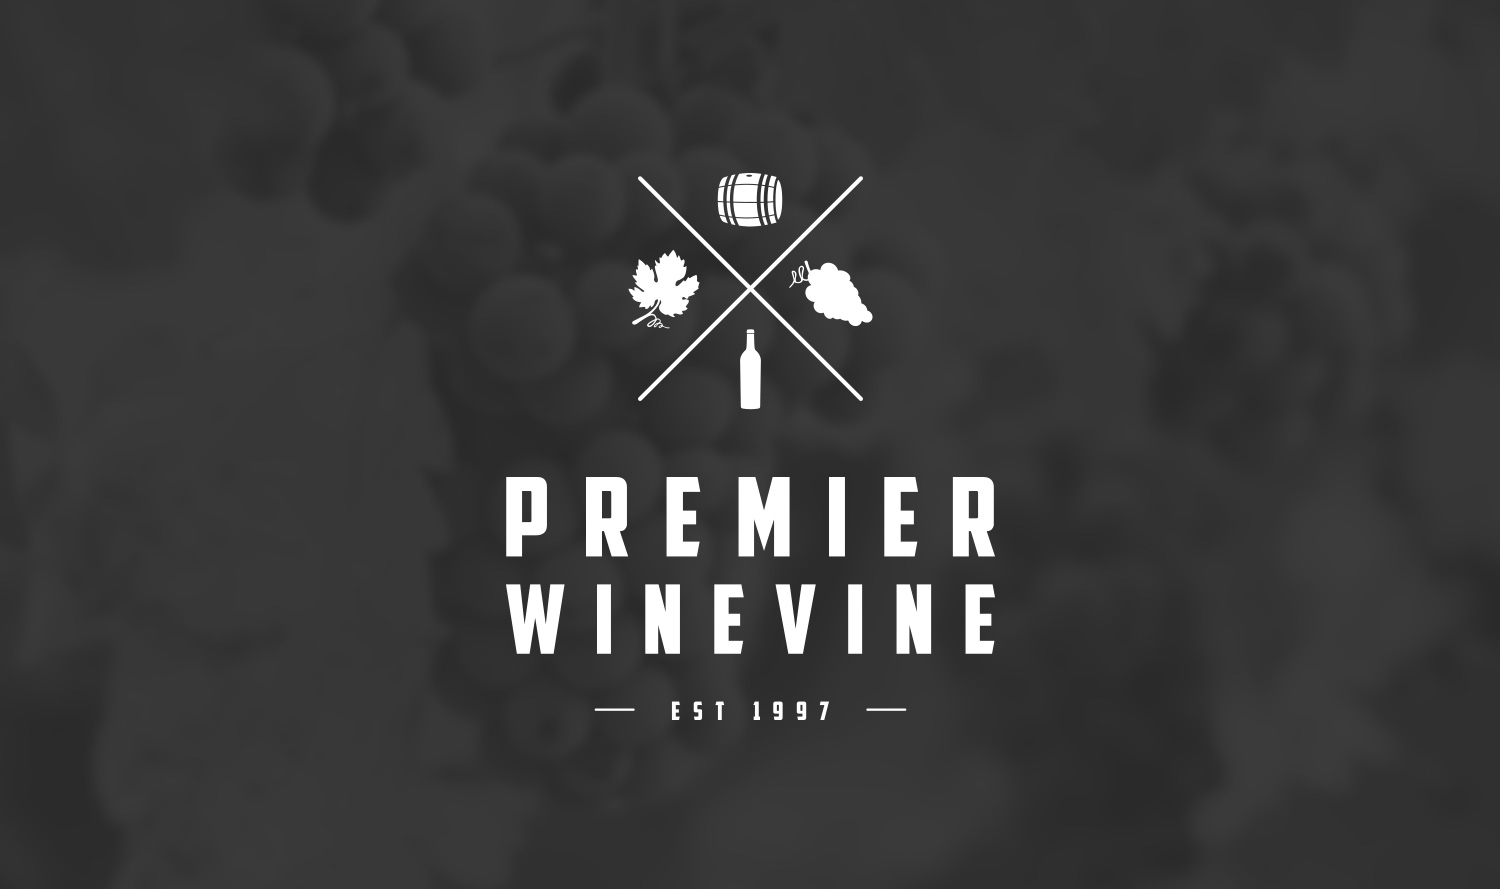 Premier Wine Vine Main Portfolio Image